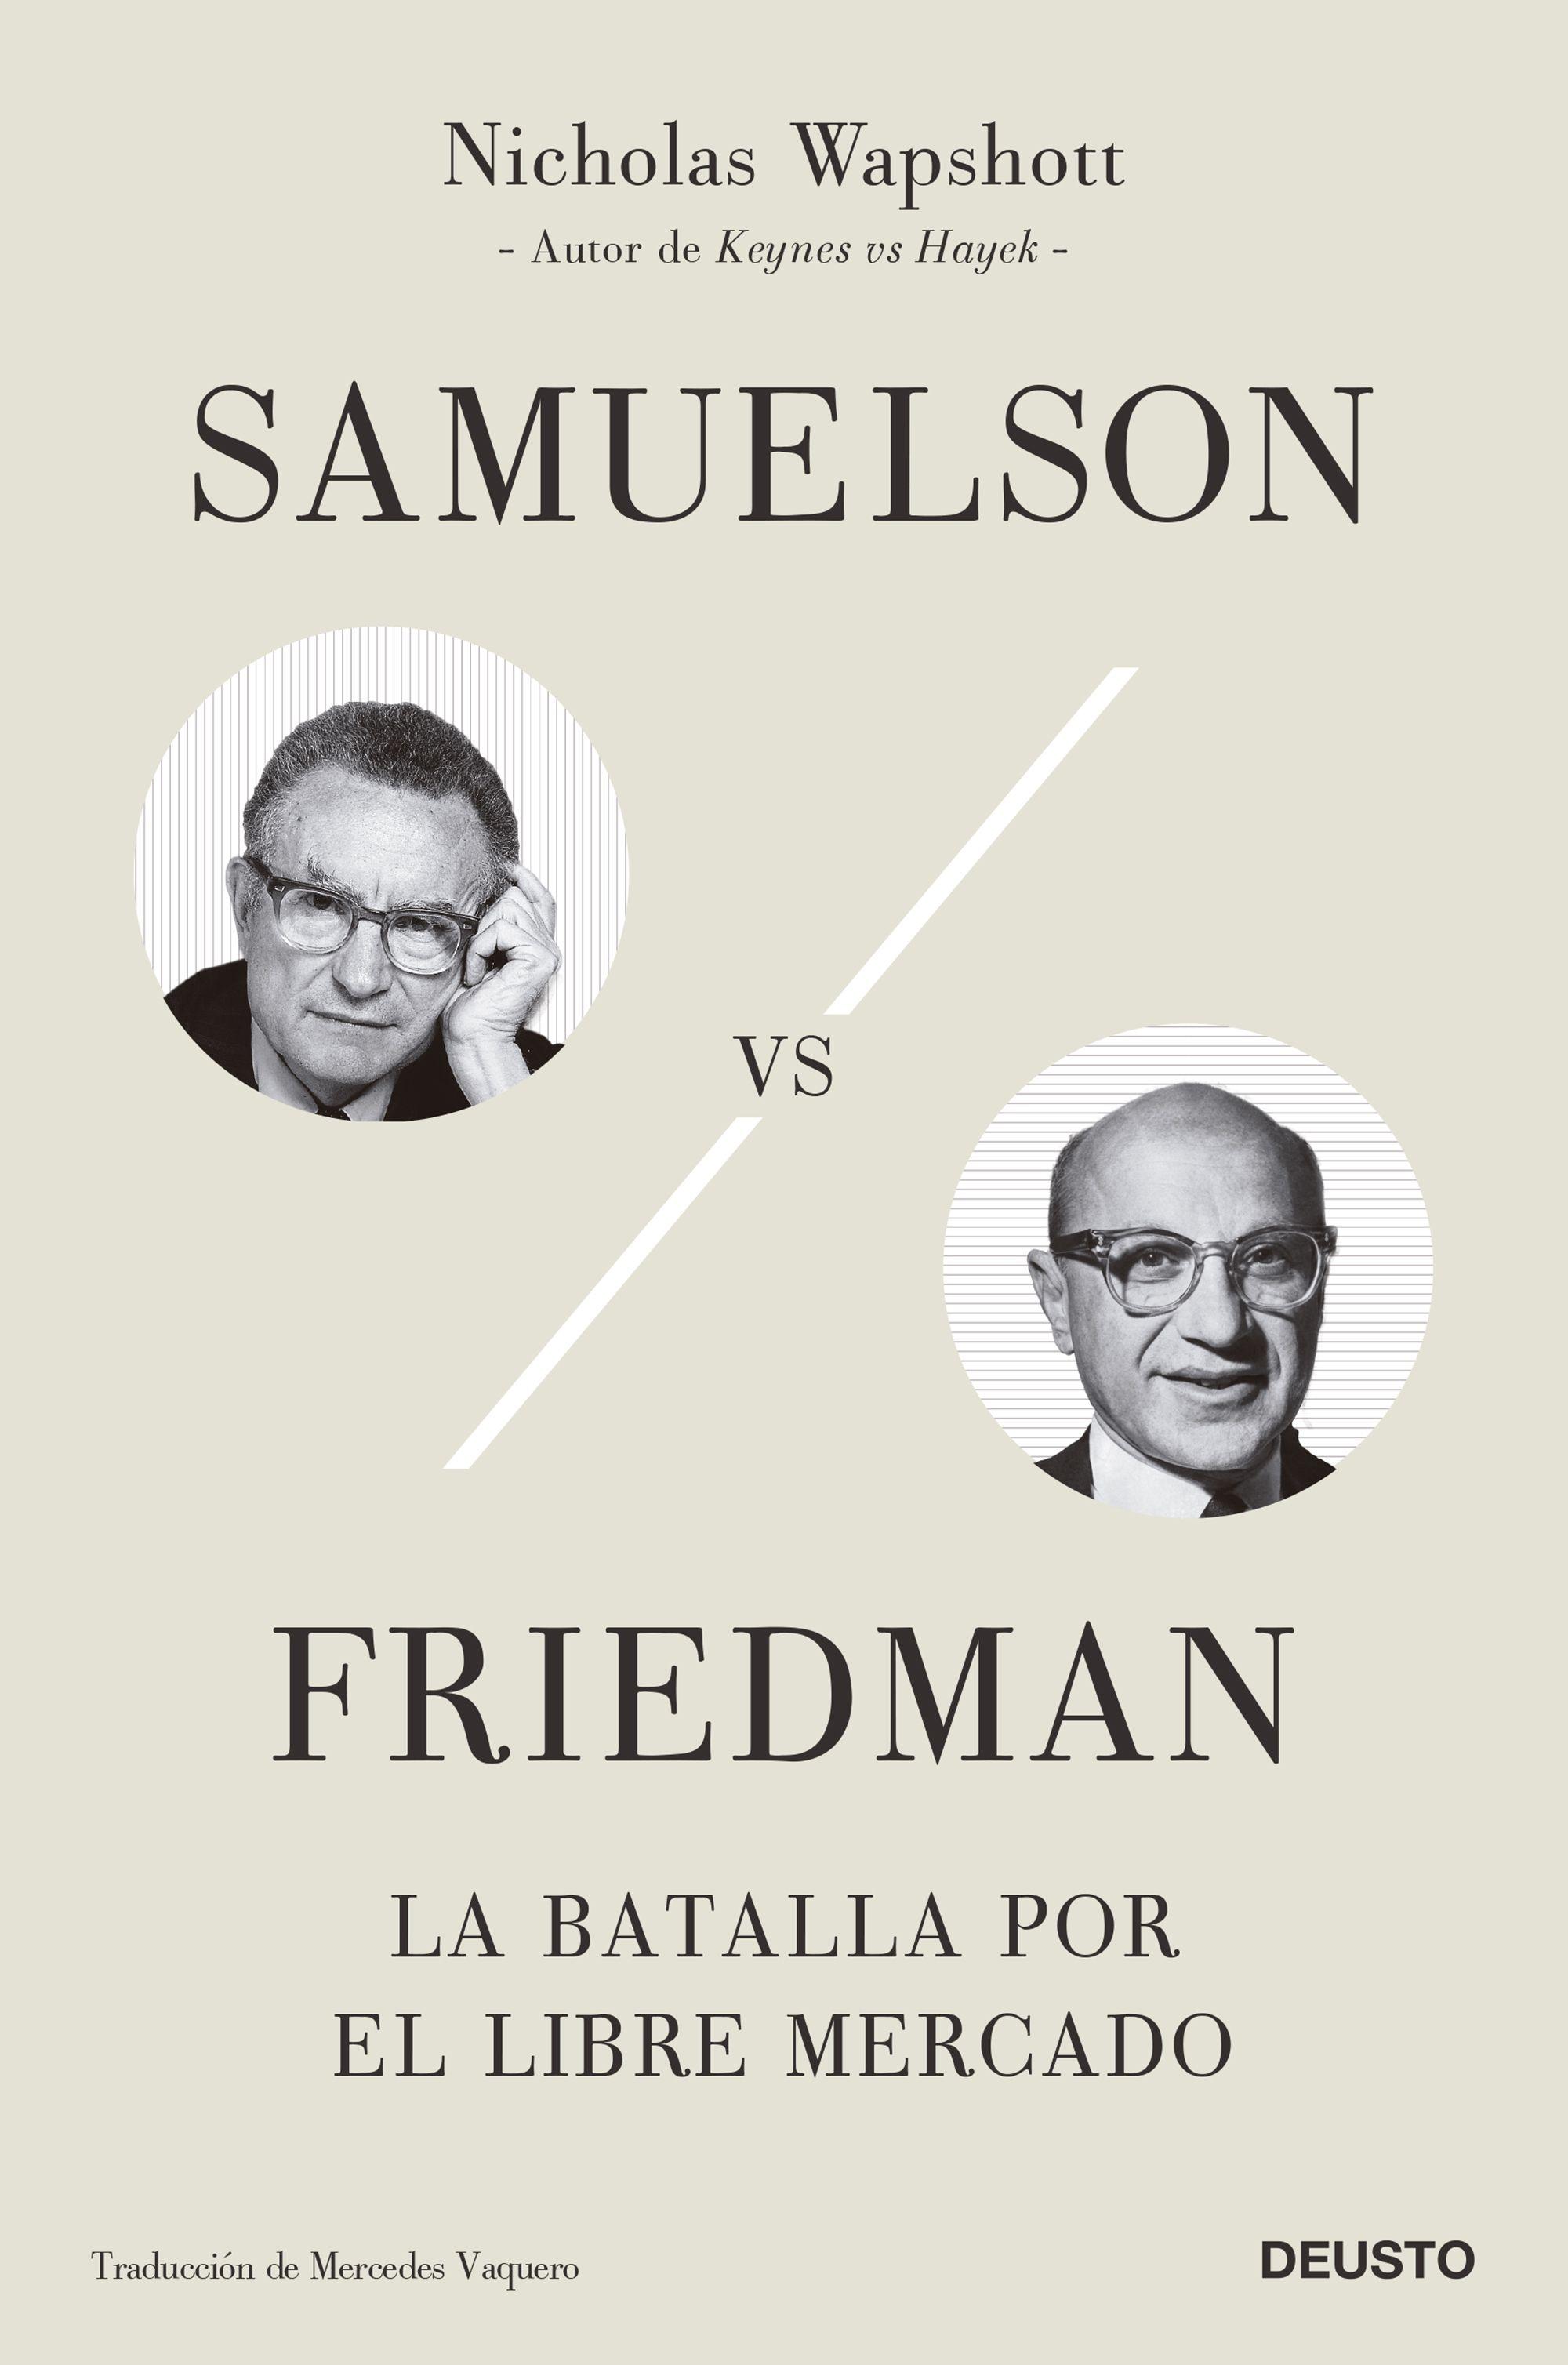 Samuelson Vs Friedman "La Batalla por el Libre Mercado"